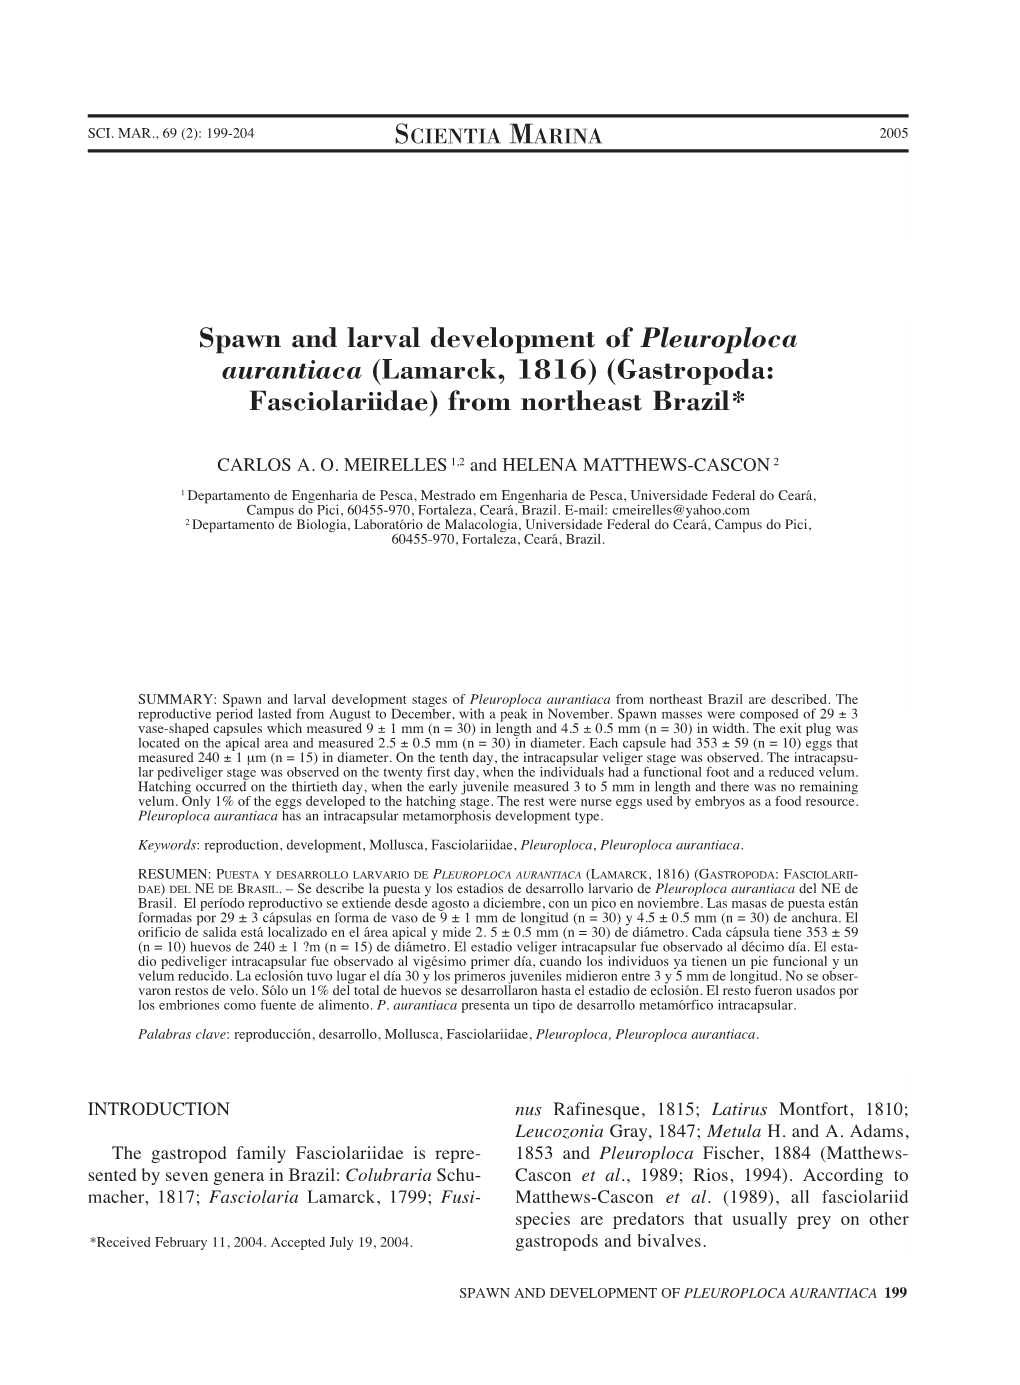 Spawn and Larval Development of Pleuroploca Aurantiaca (Lamarck, 1816) (Gastropoda: Fasciolariidae) from Northeast Brazil*